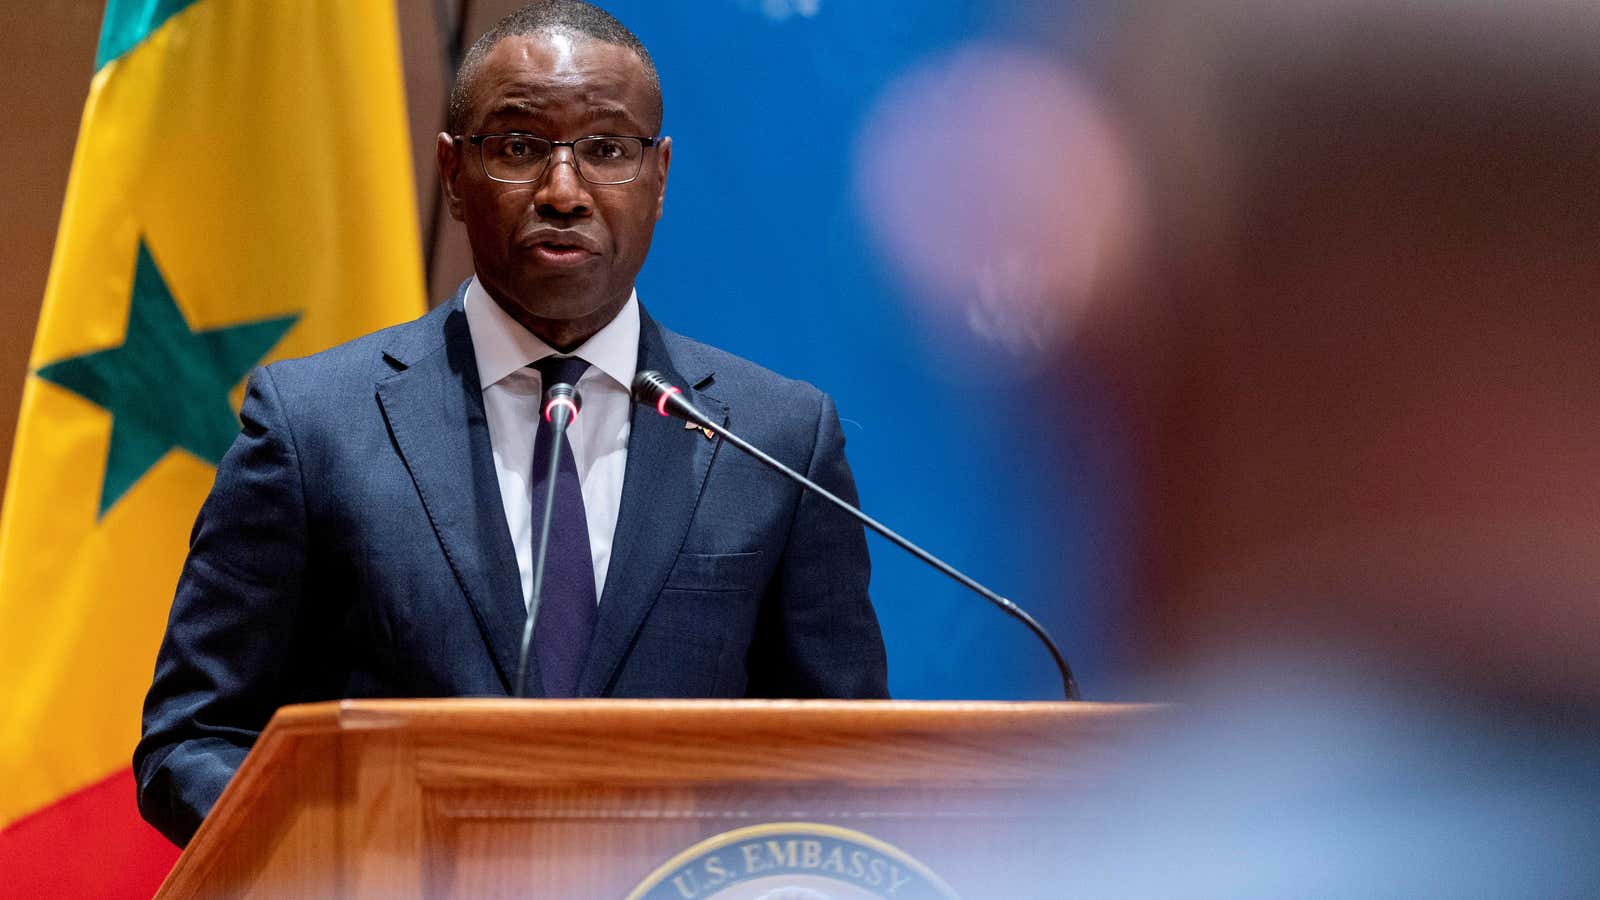 Senegal’s Minister of Economy, Planning and International Cooperation Amadou Hott spoke at the AVCA opening ceremony in Dakar, Senegal.